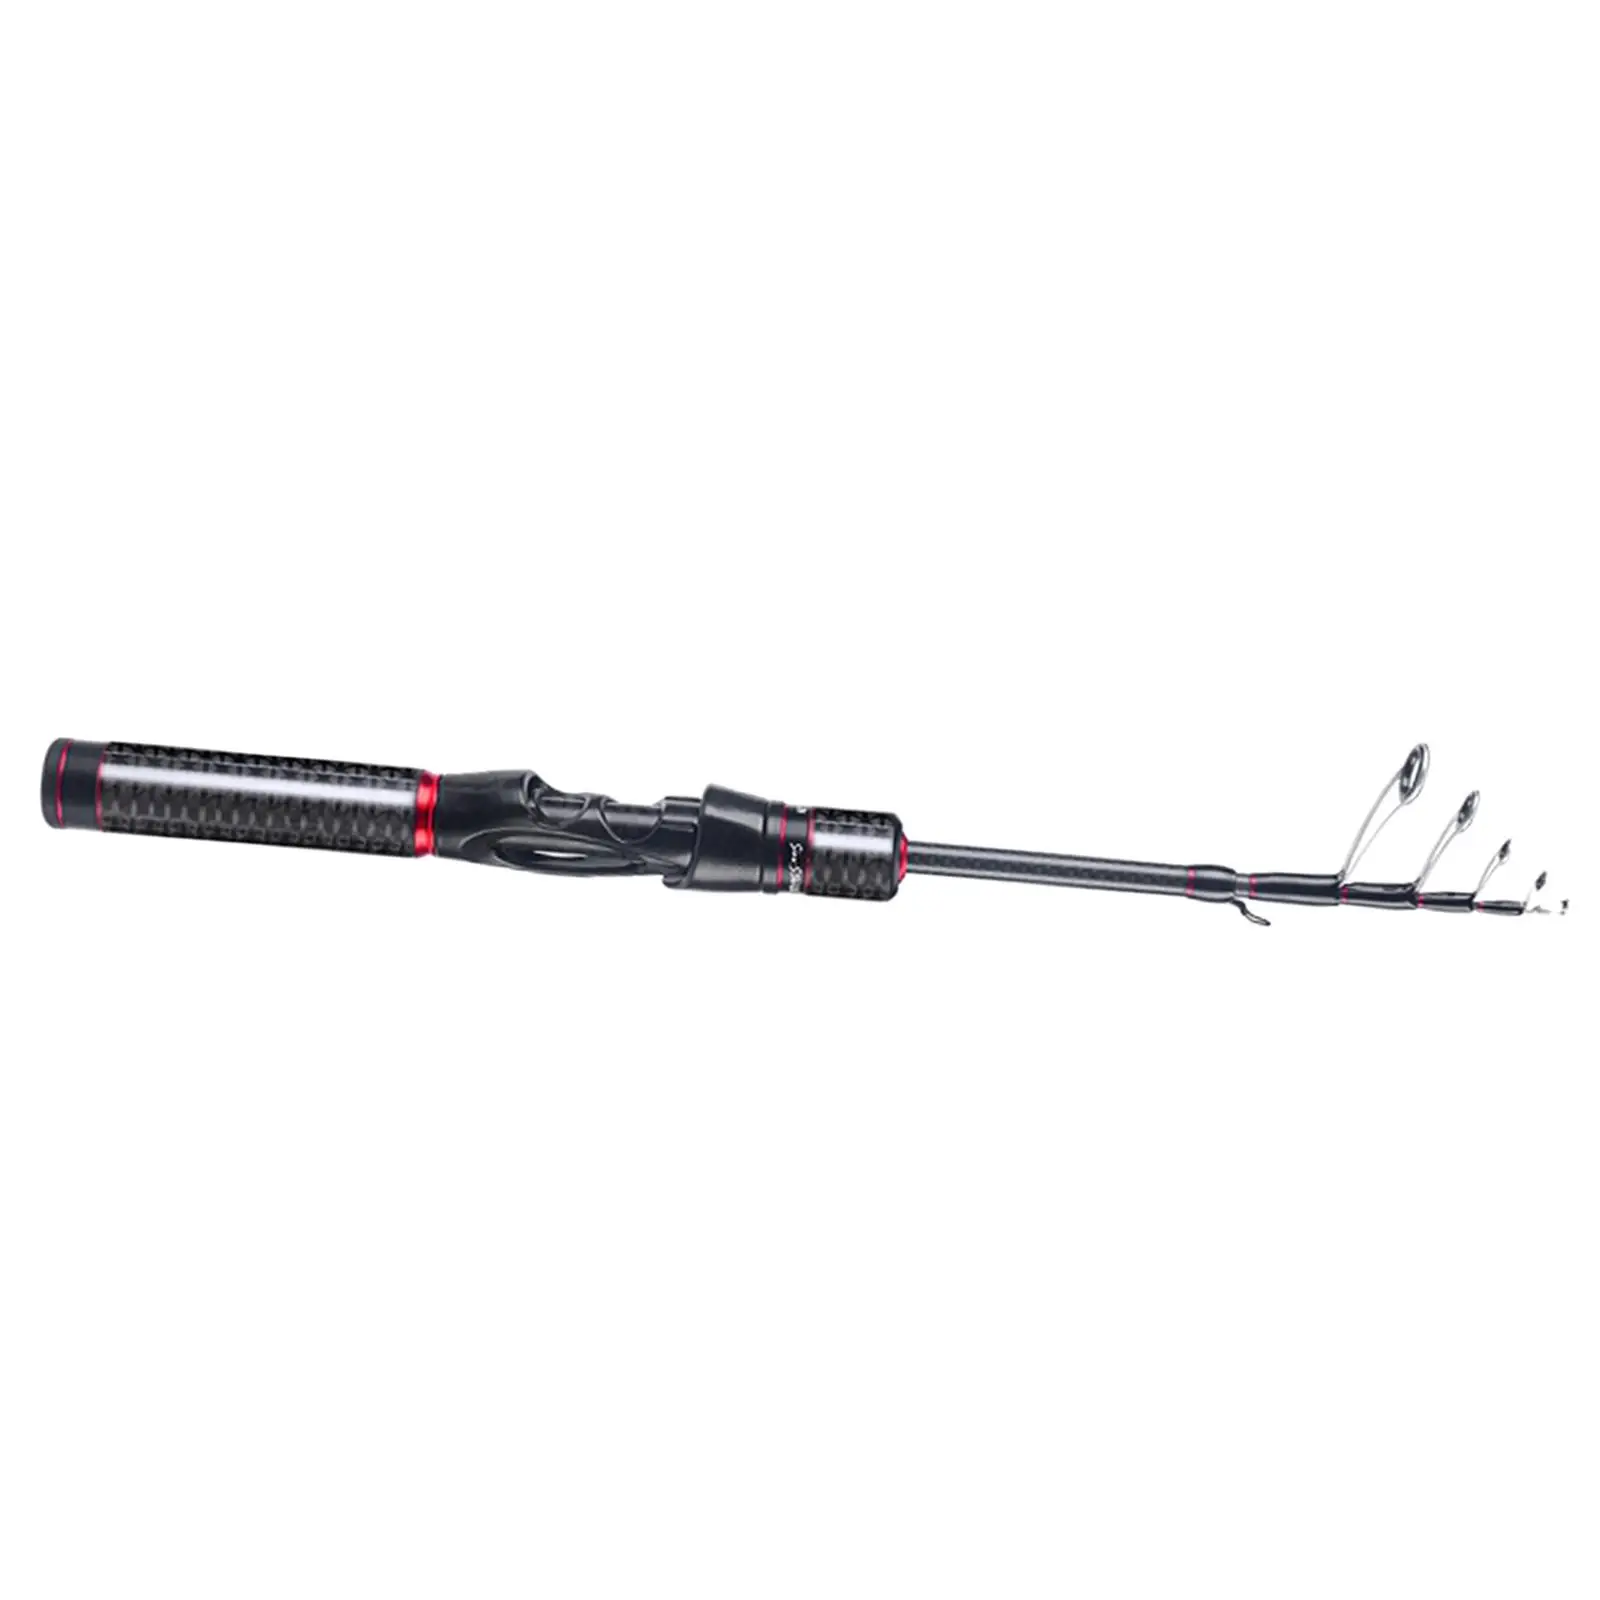 Carbon Fiber Fishing Rod, Telescopic Fishing Pole Fish Rod Retractable Handle, Fishing Tool for Salmon Bass Carp Trout